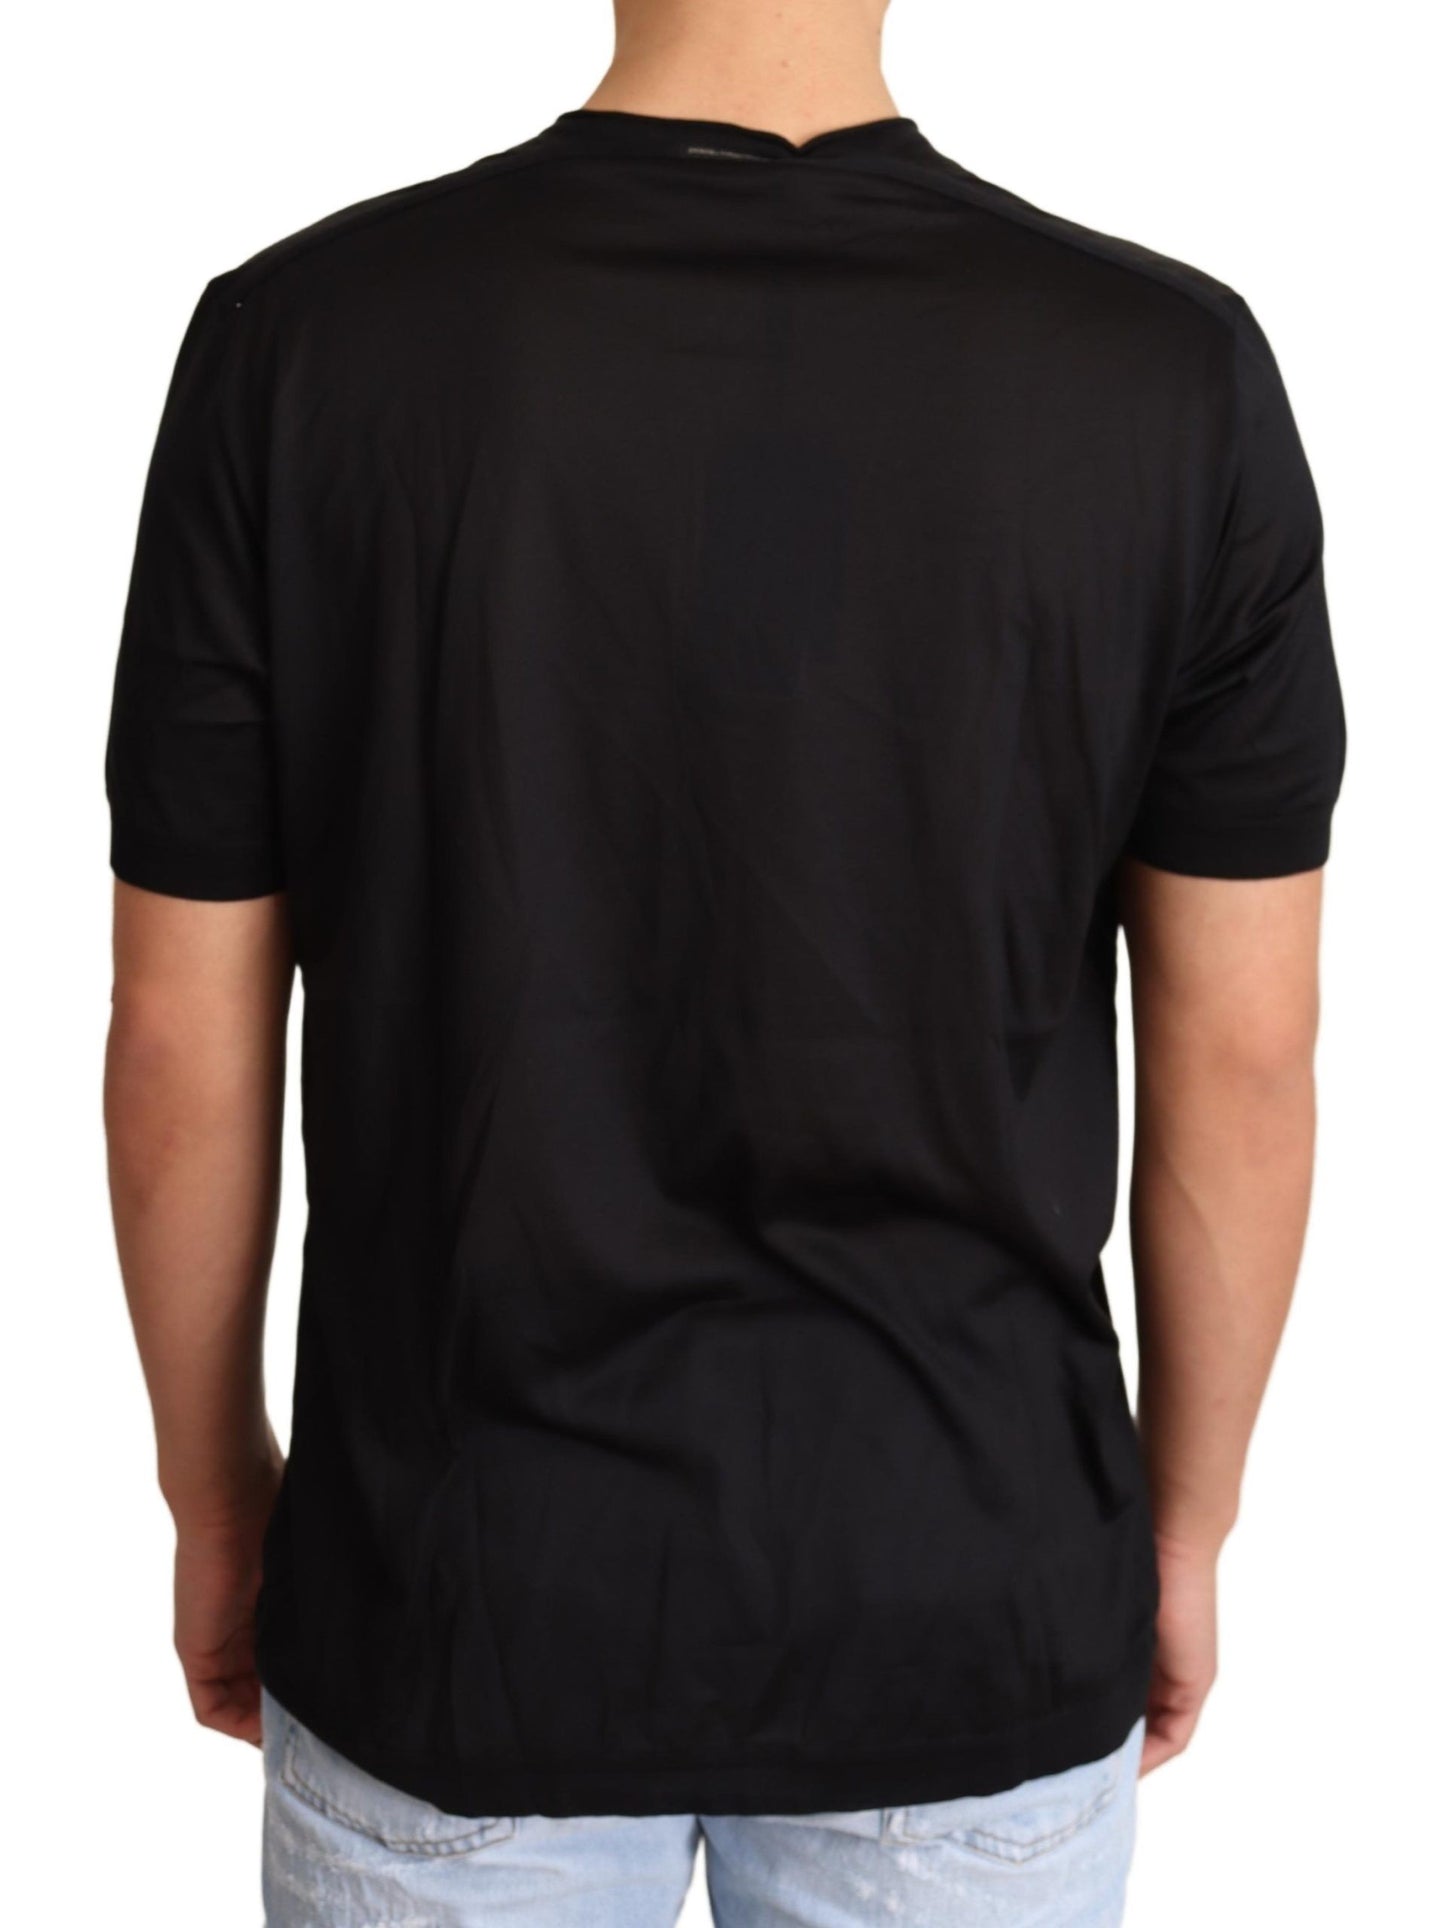 Black Silk Henley Crewneck Top T-shirt